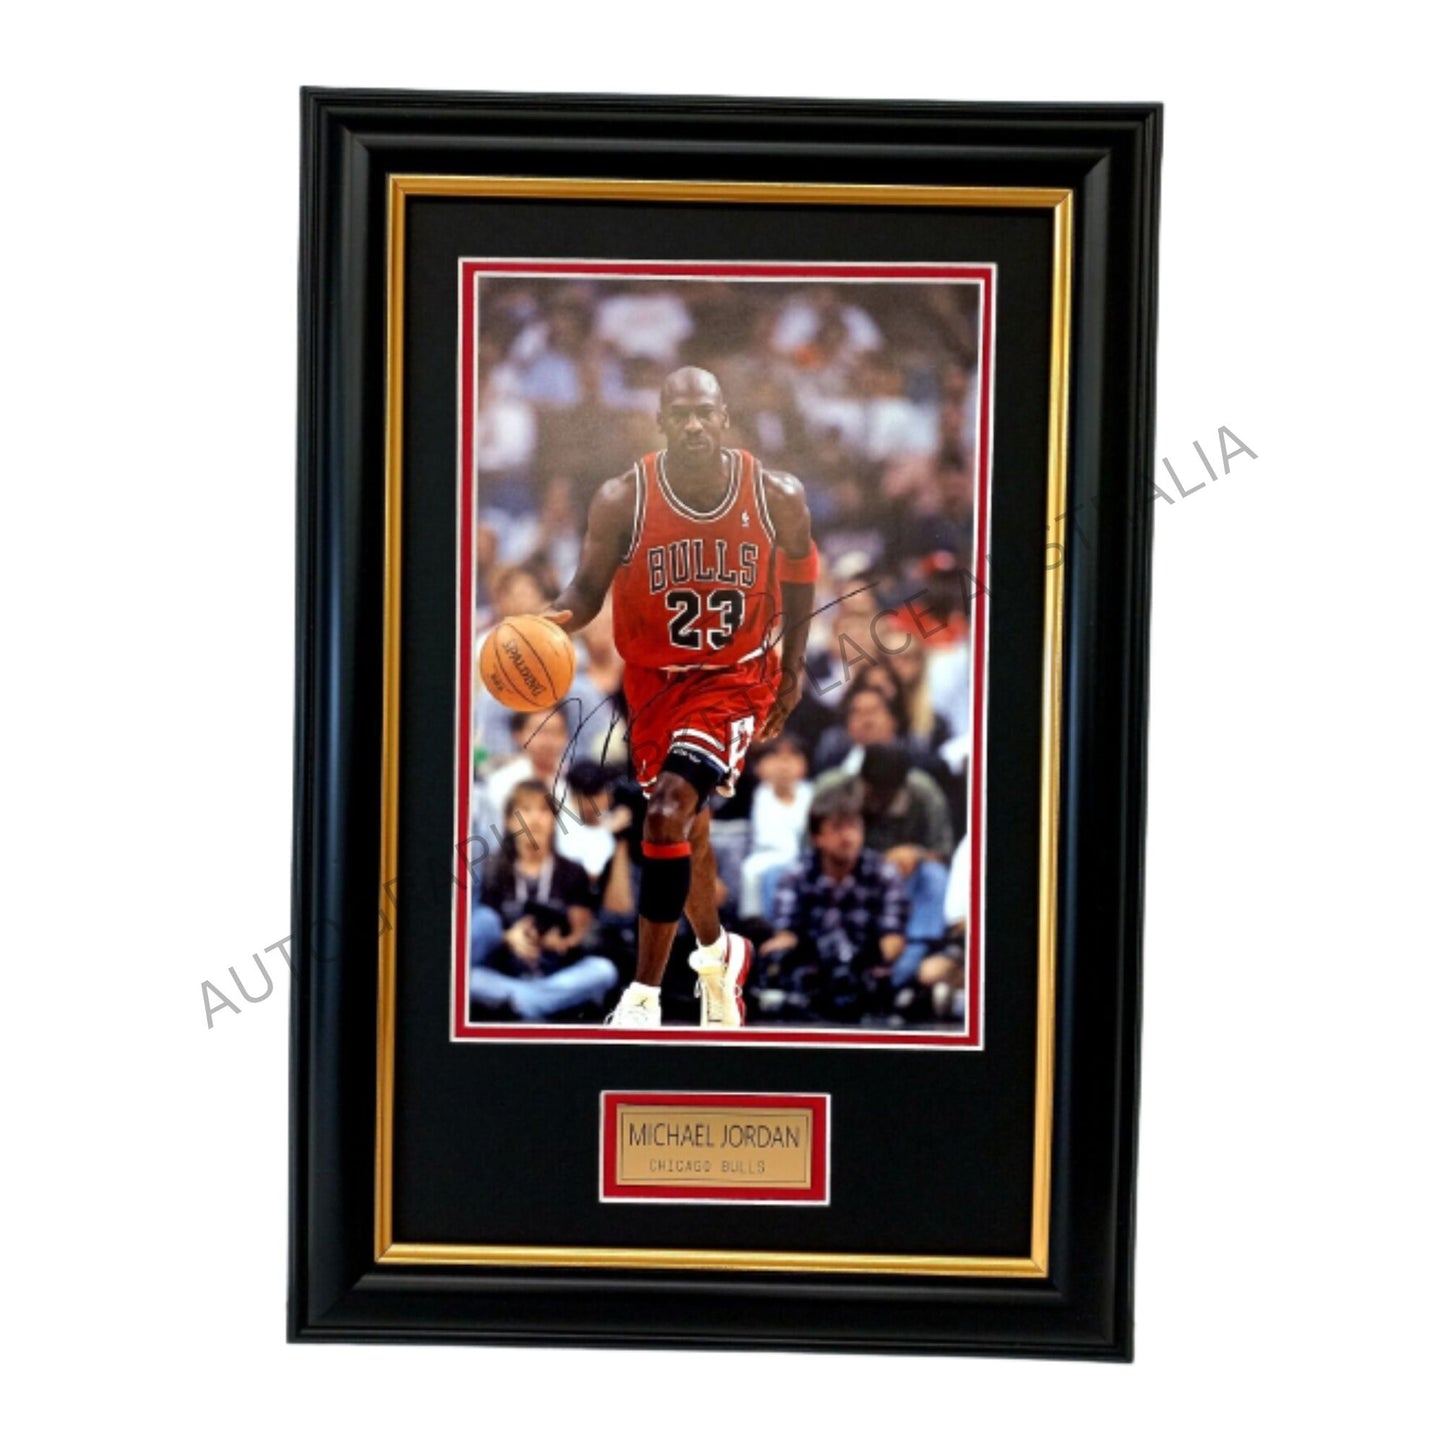 MICHAEL JORDAN "The greatest of all time" Chicago Bulls Signed Framed Photo